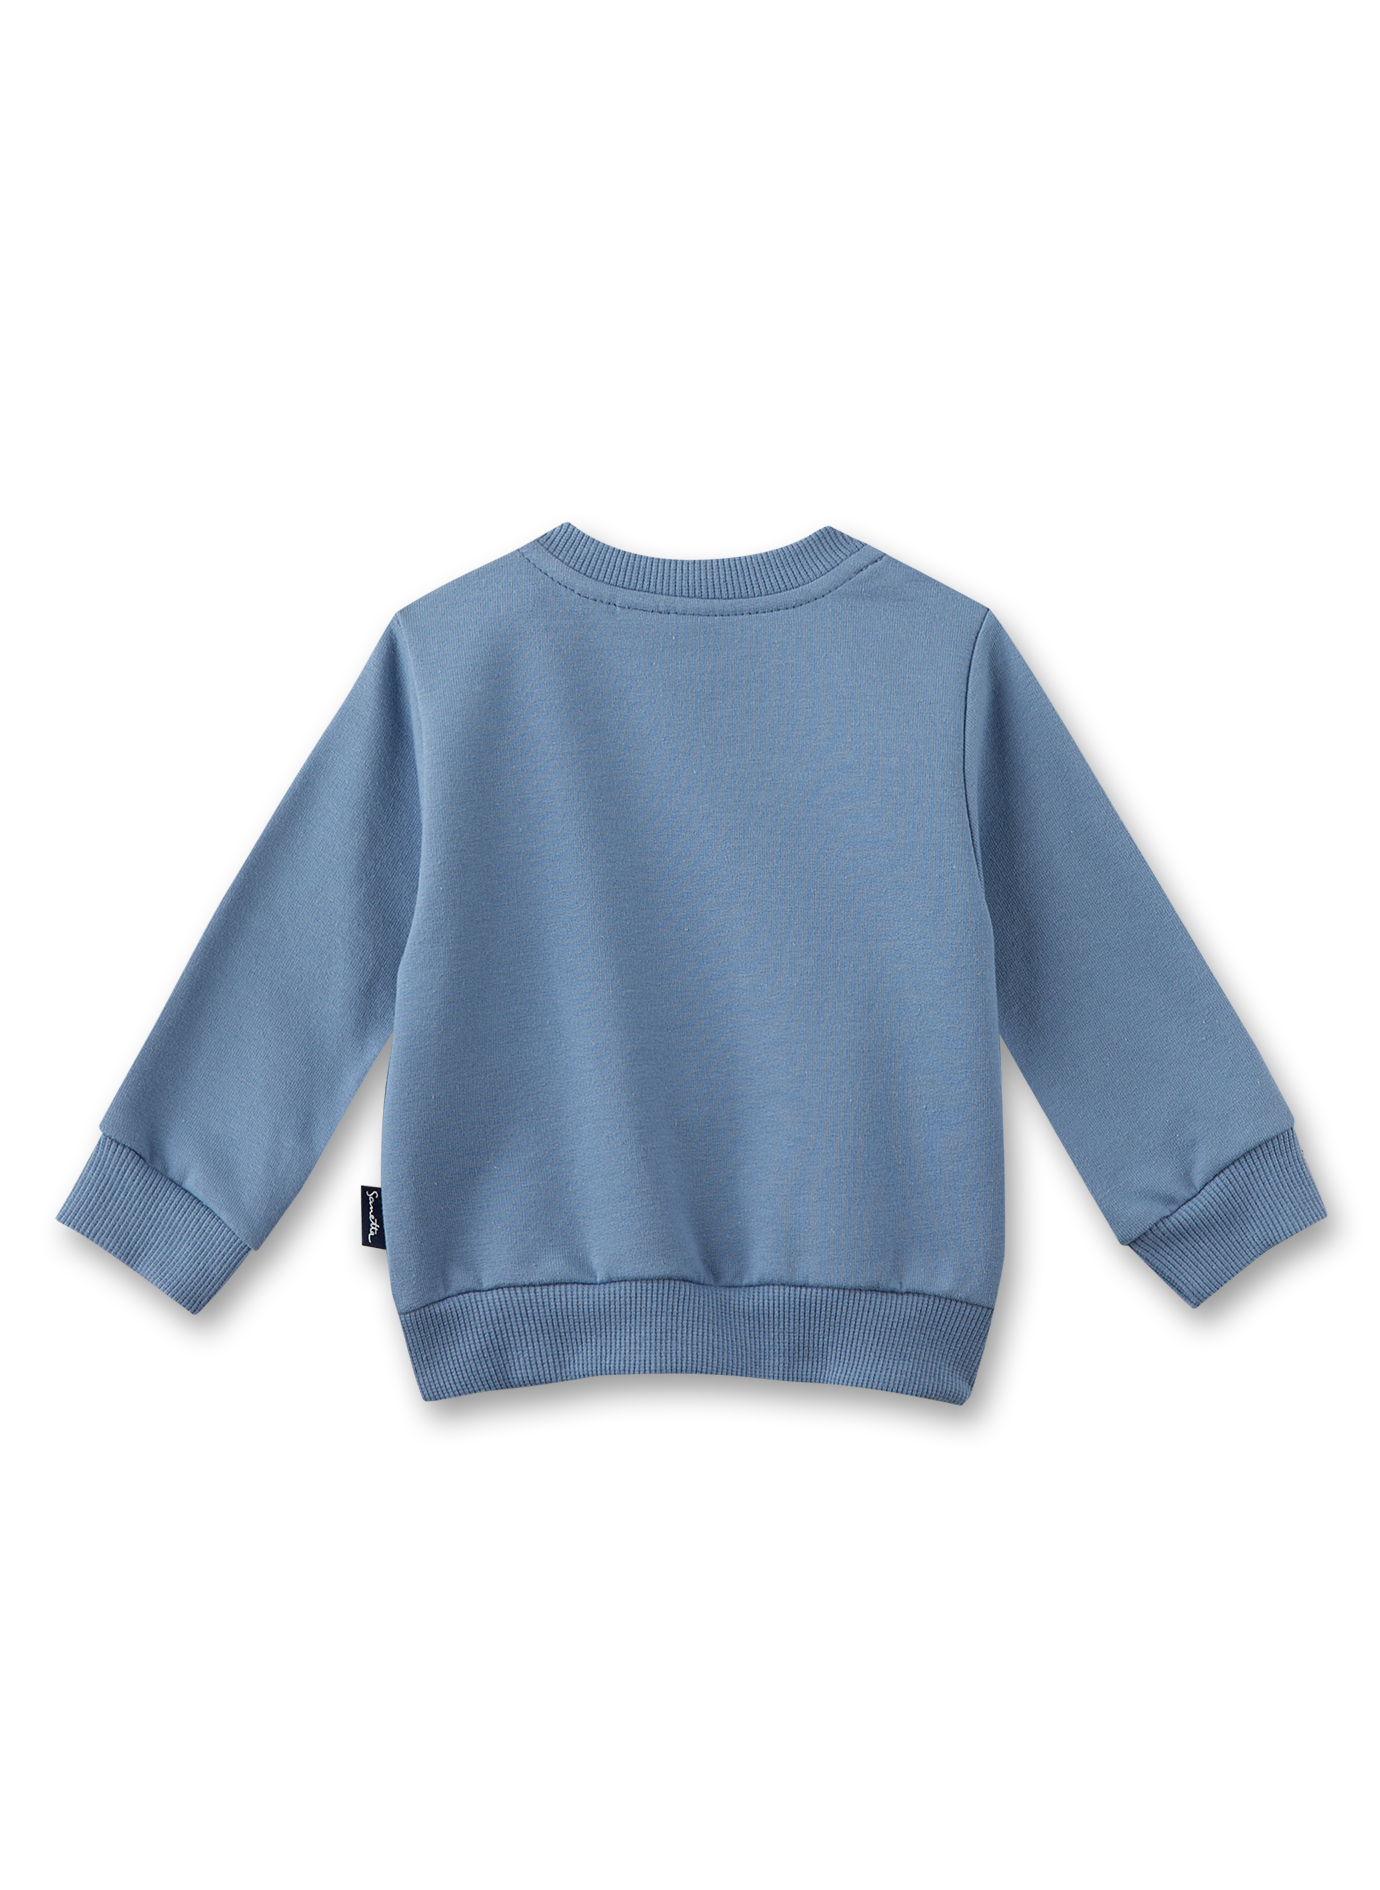 Jungen-Sweatshirt Blau